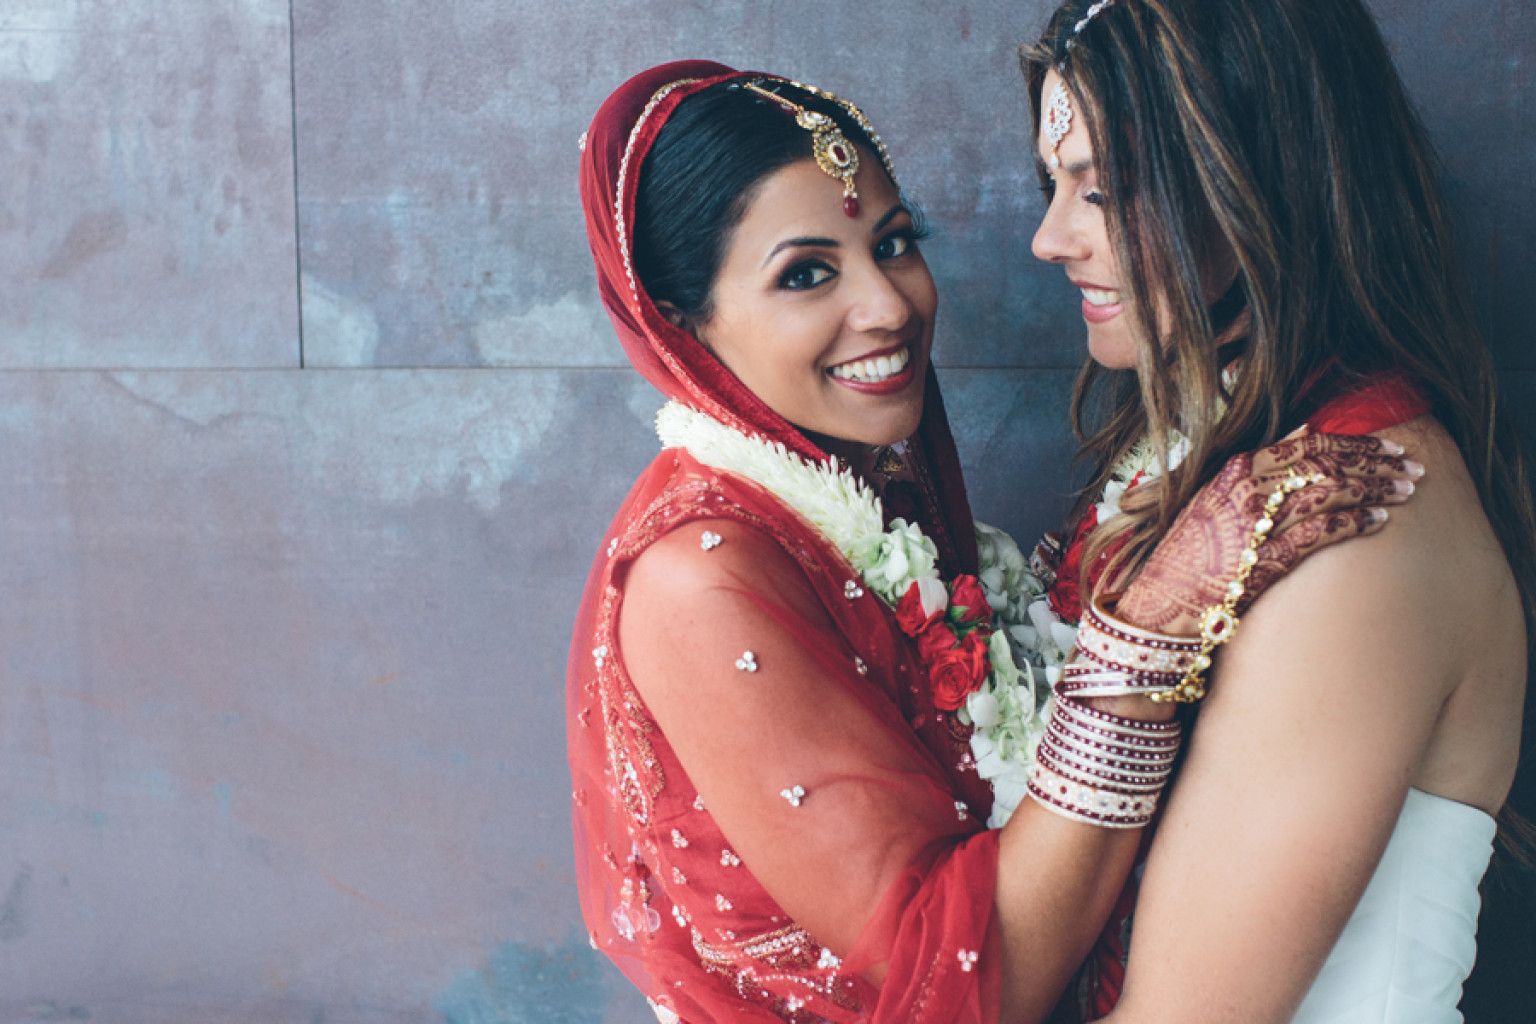 Steph Grant Photographer Shares Gorgeous Lesbian Indian Wedding 9633